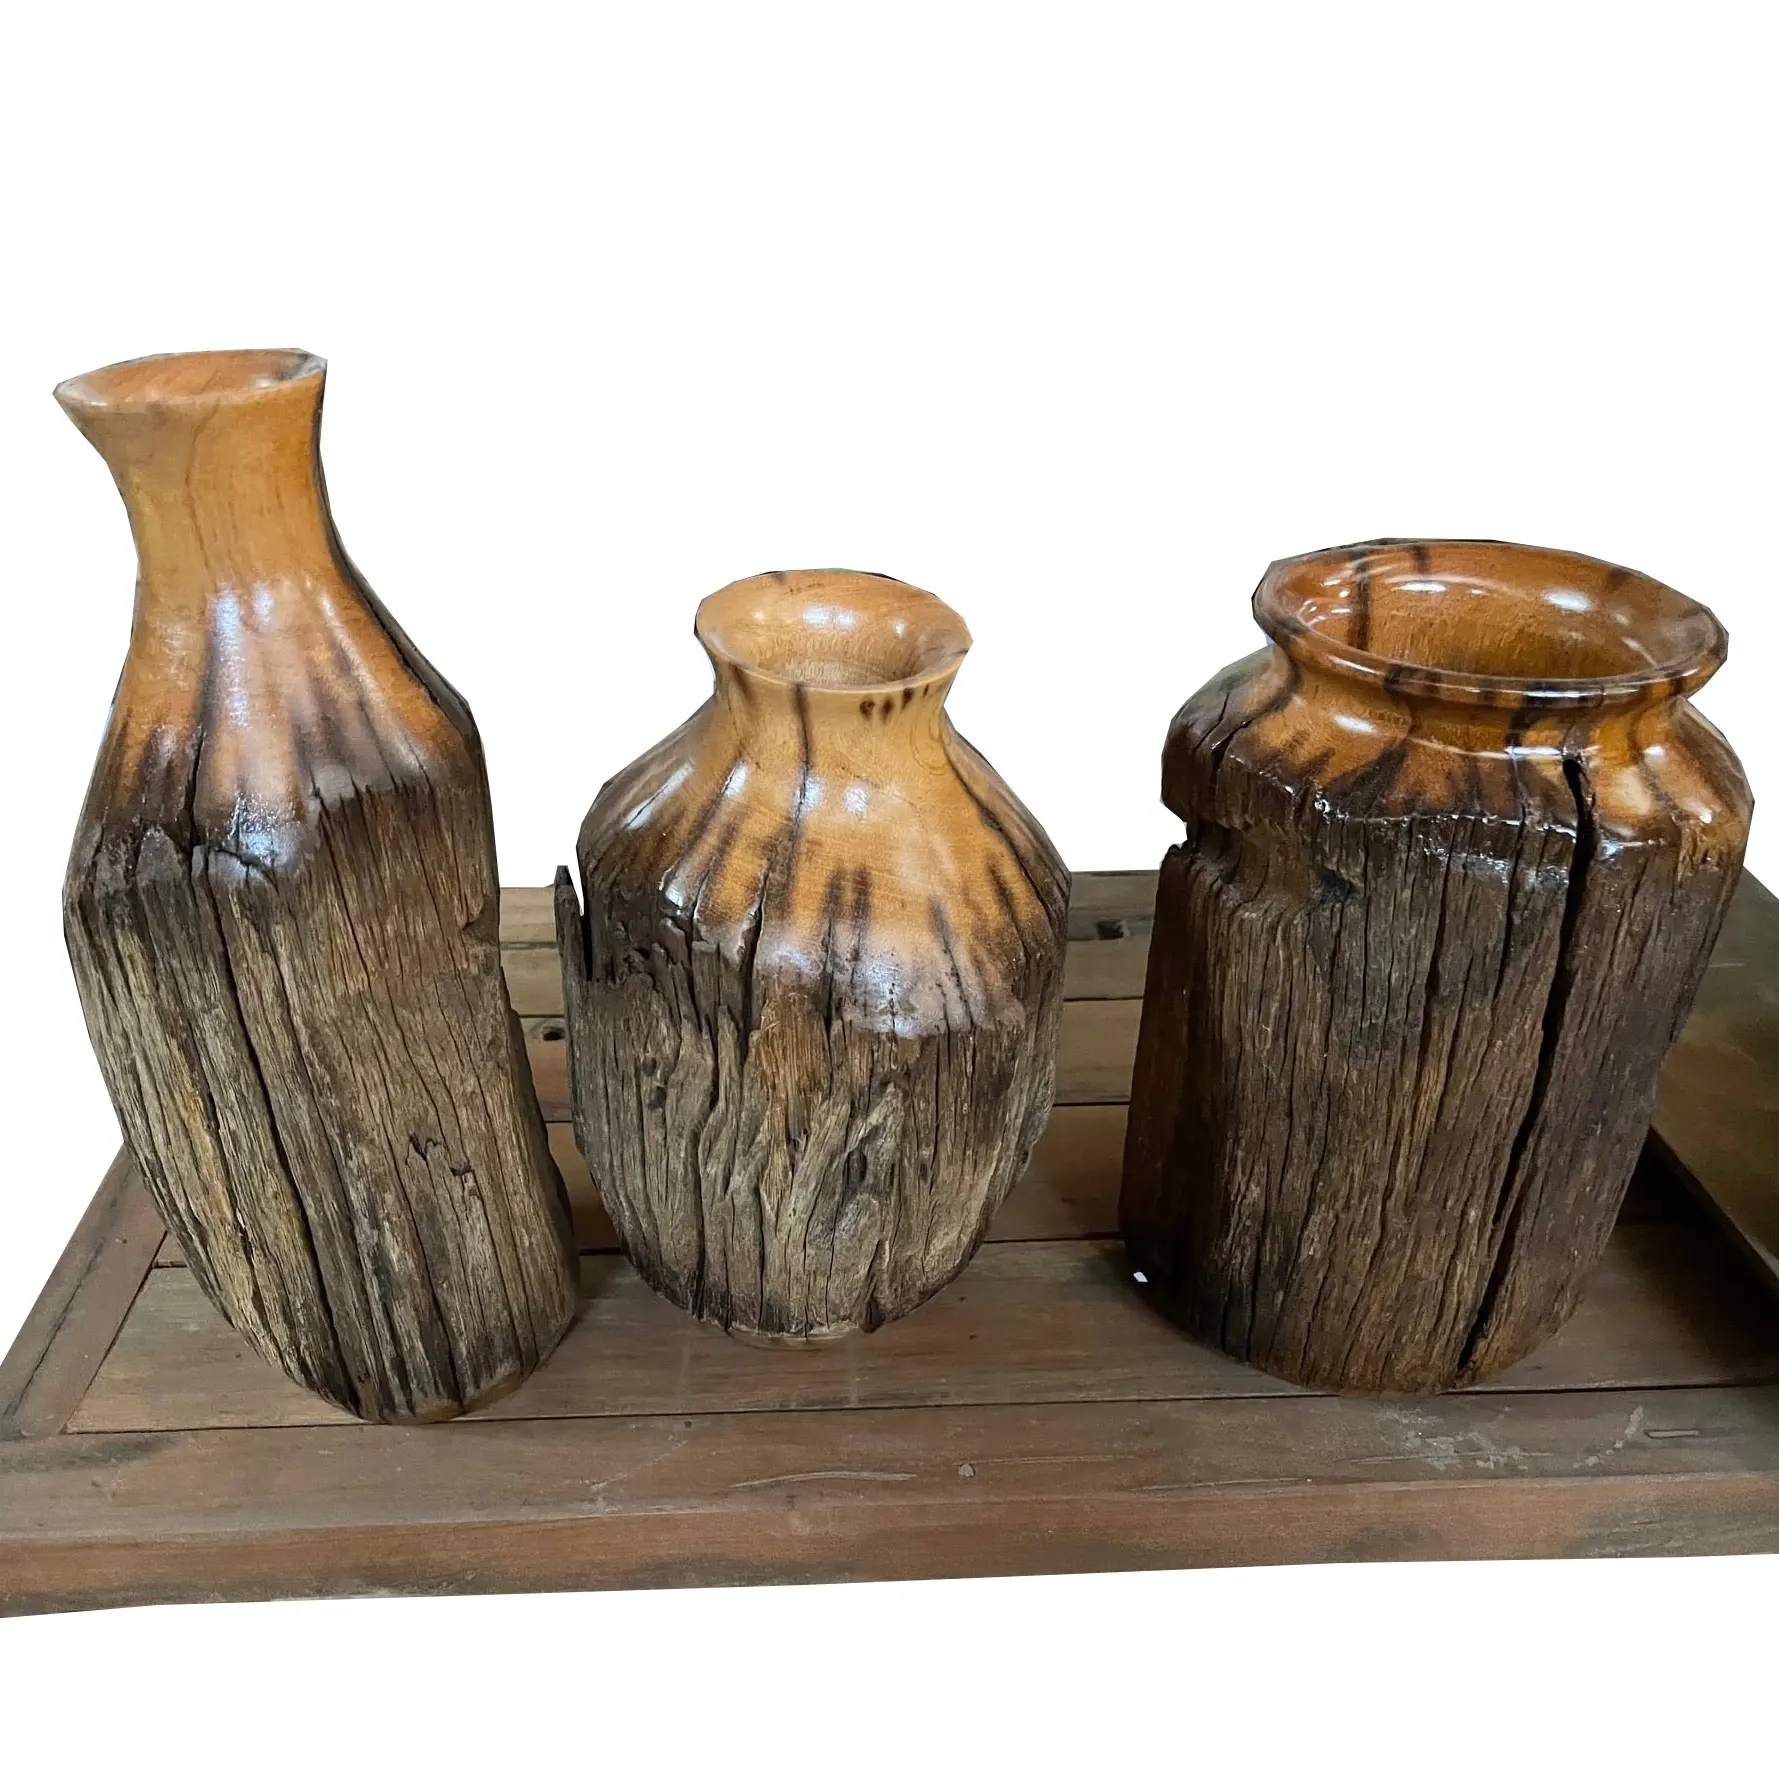 Antique wooden vintage retro decorative solid wooden flower vases decorative handmade manufacturer from Vietnam